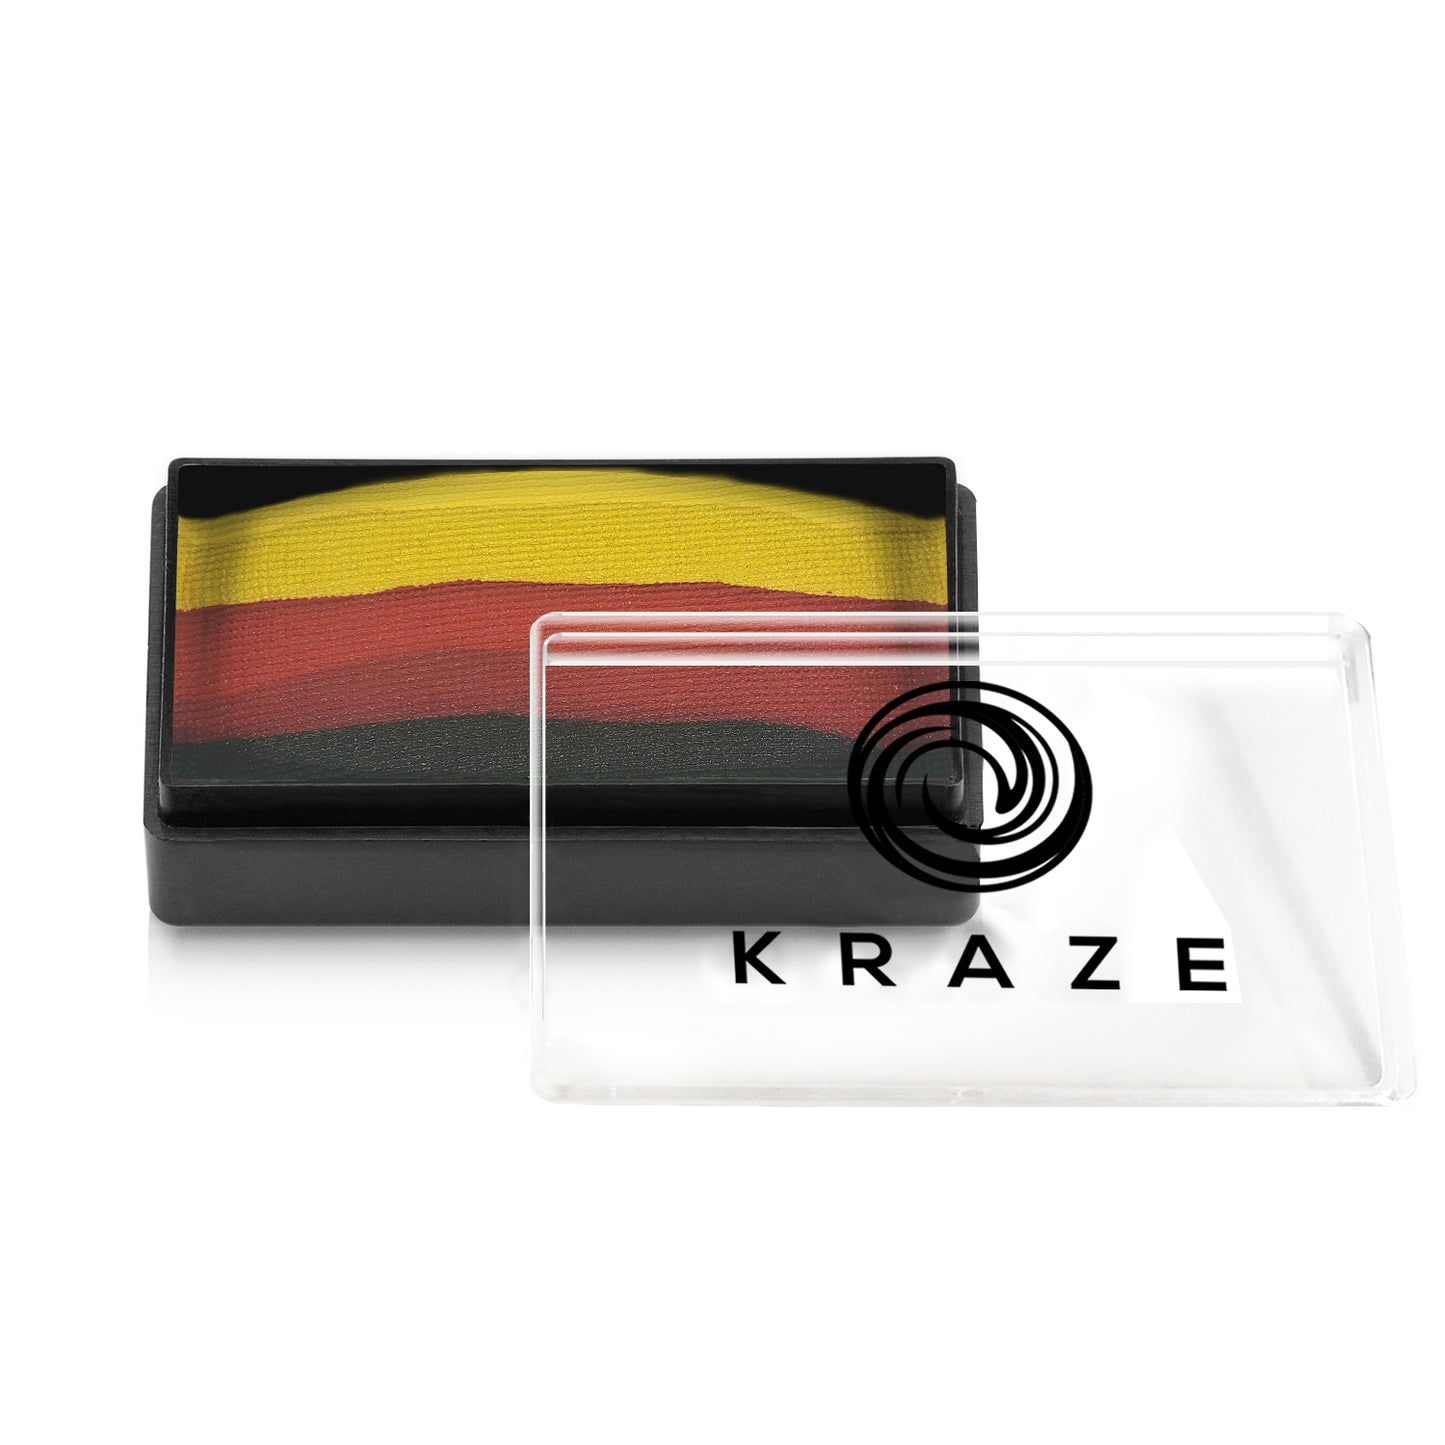 Kraze FX Dome Stroke - Jacqueline Howe Bold and Brilliant Collection - Royal Blood (25 gm)